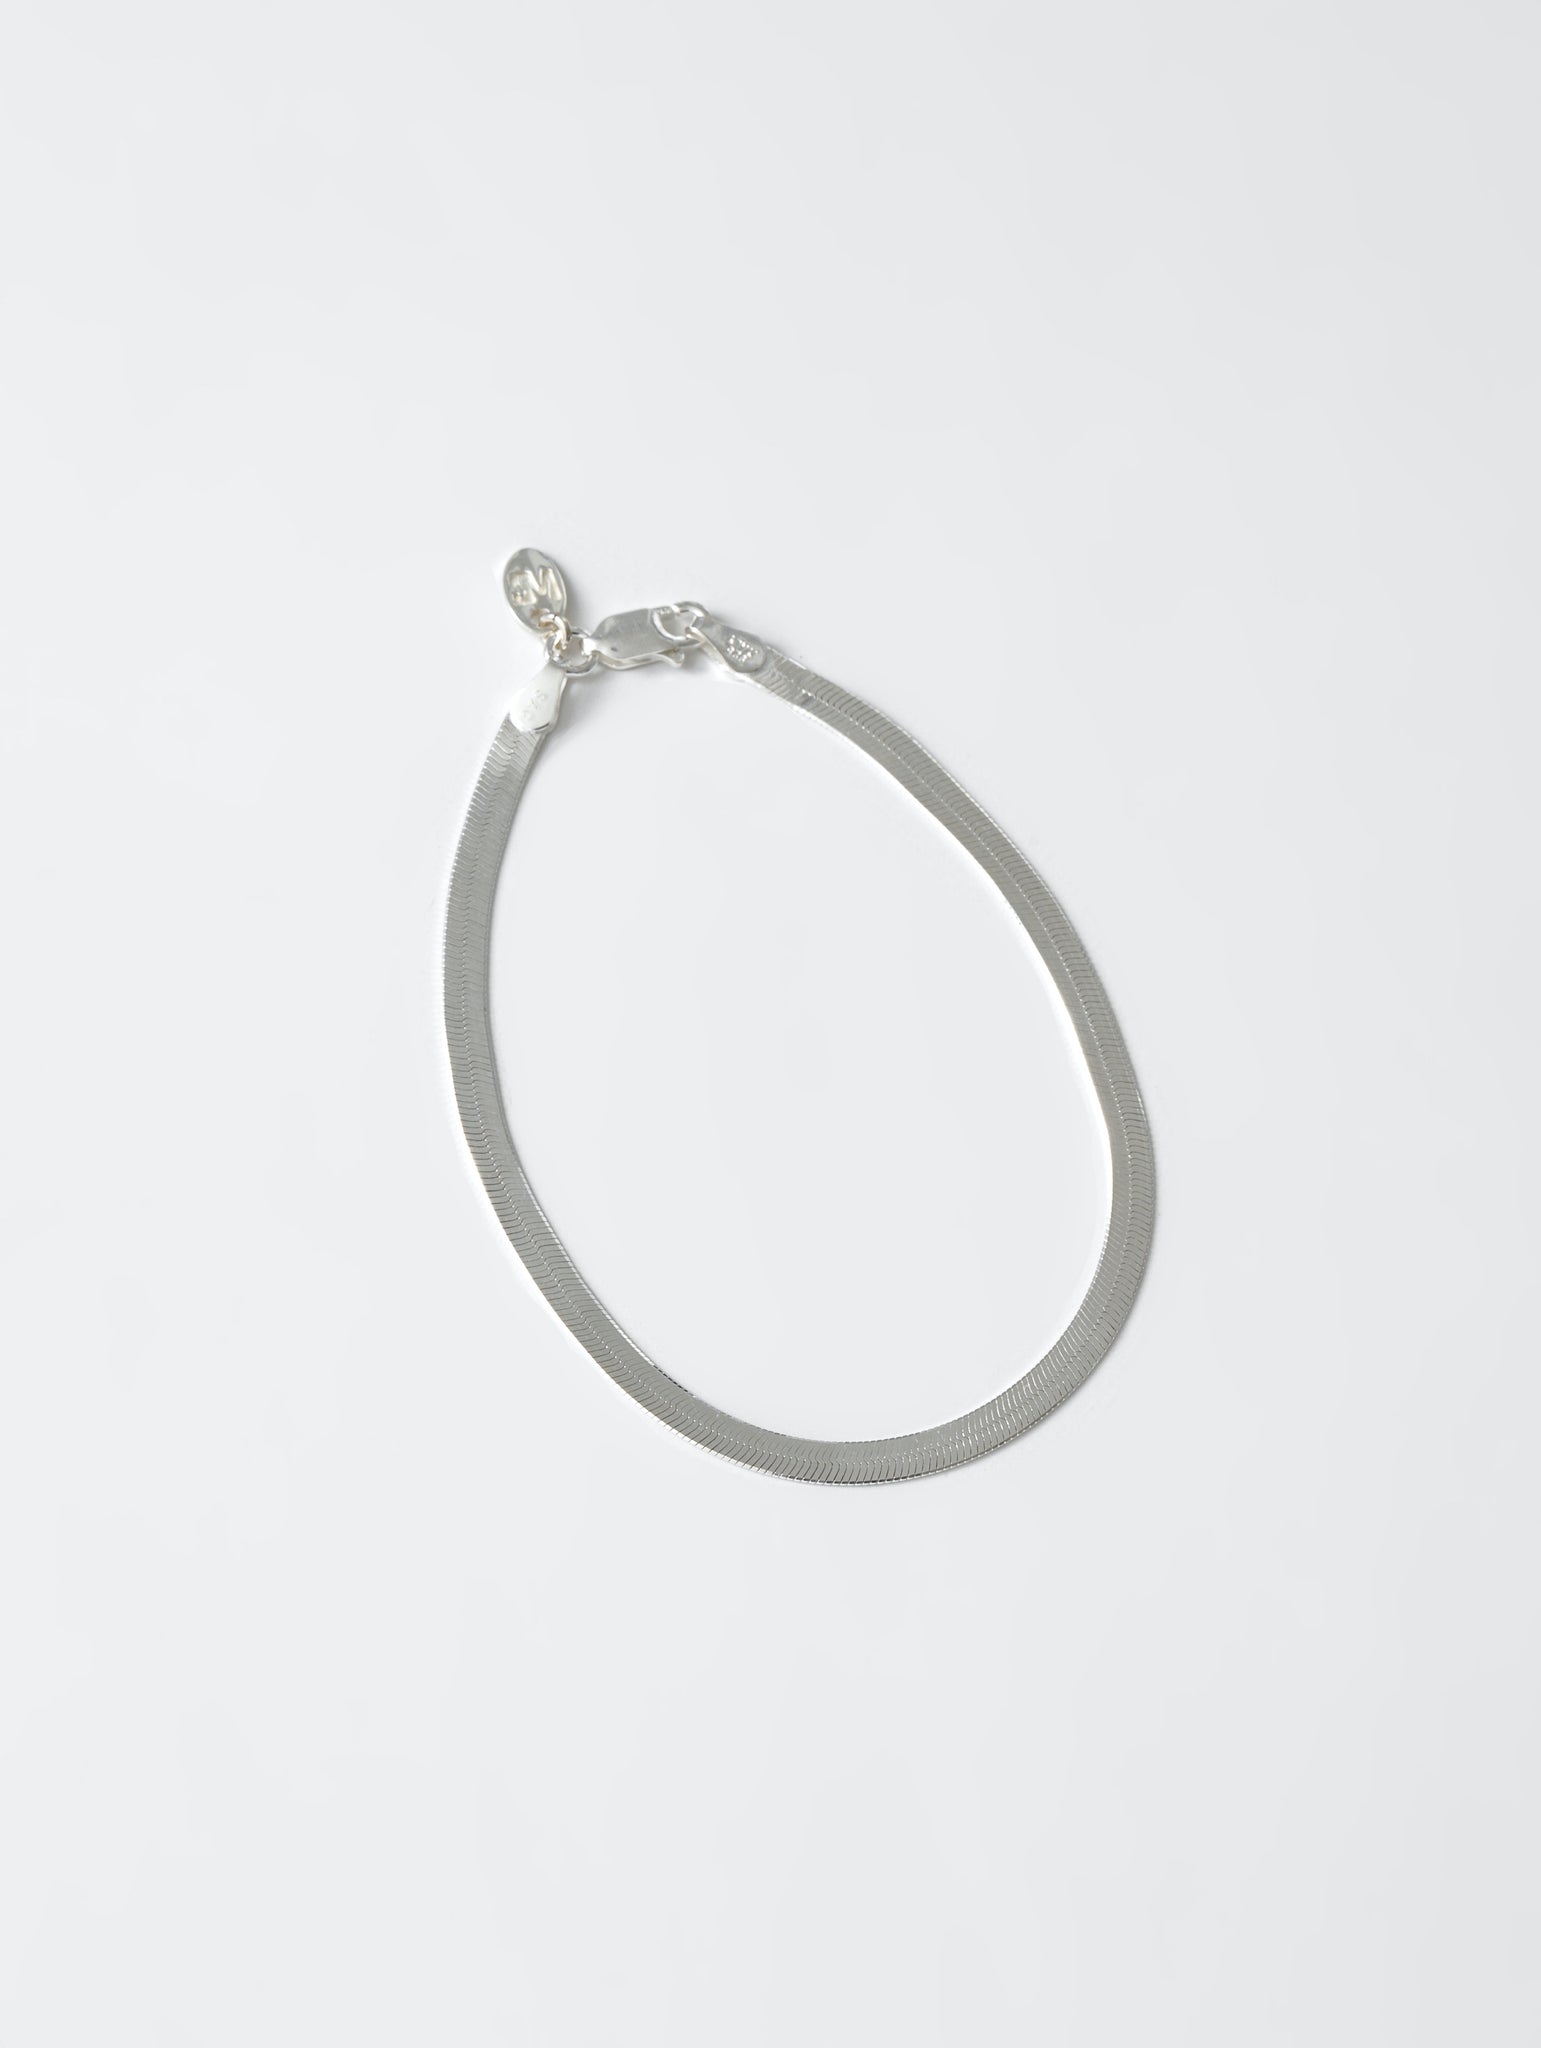 Herringbone Bracelet in Sterling Silver